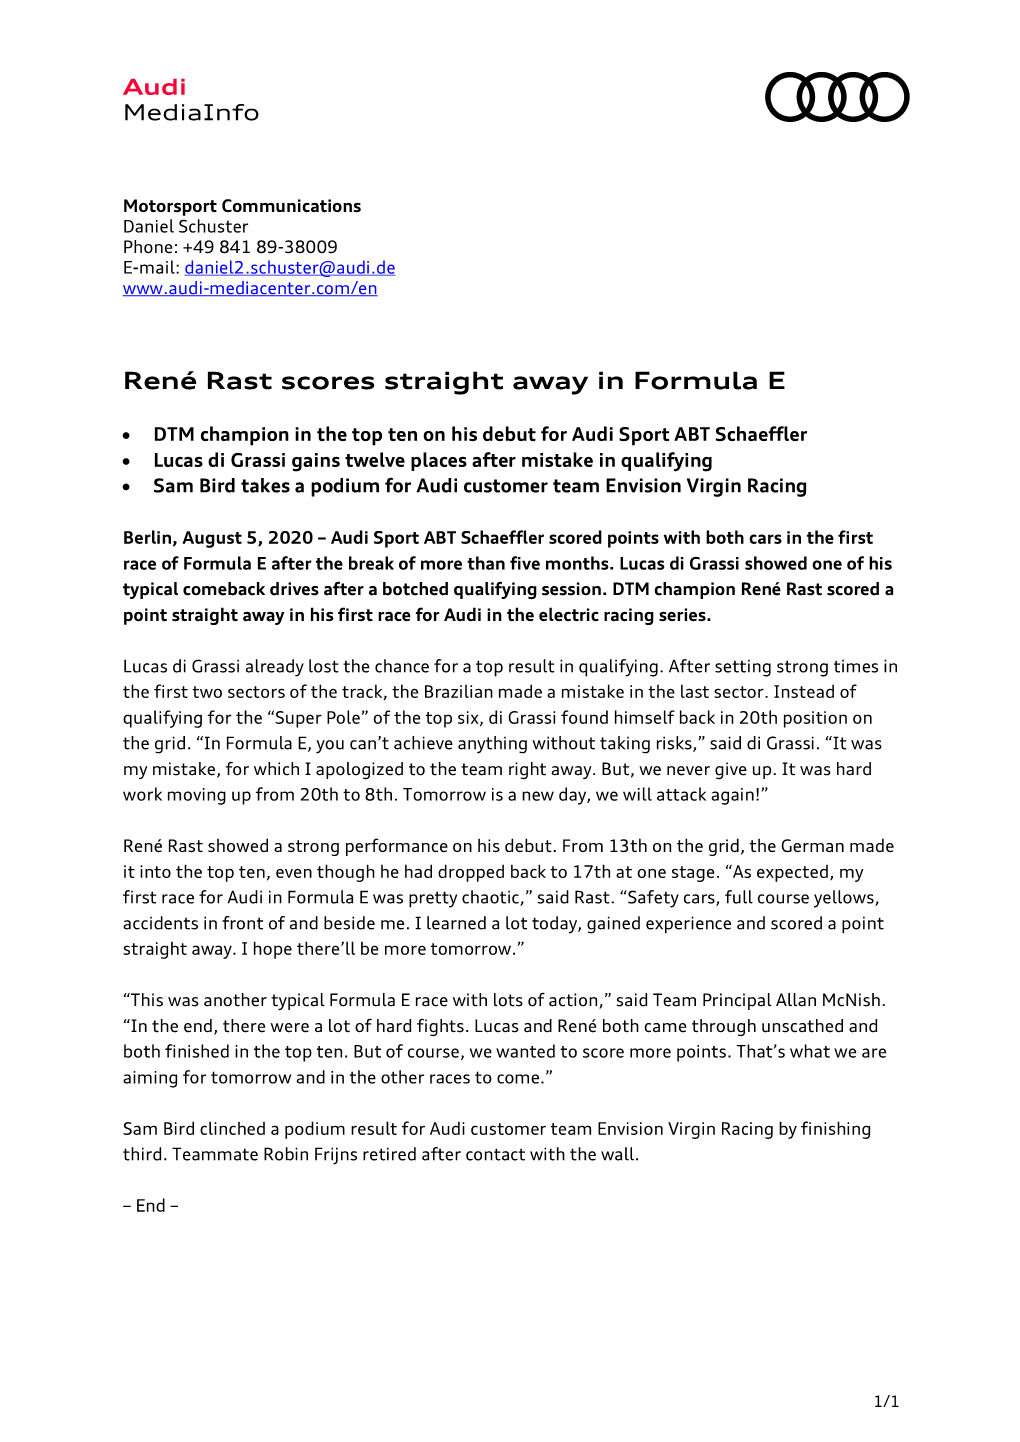 René Rast Scores Straight Away in Formula E